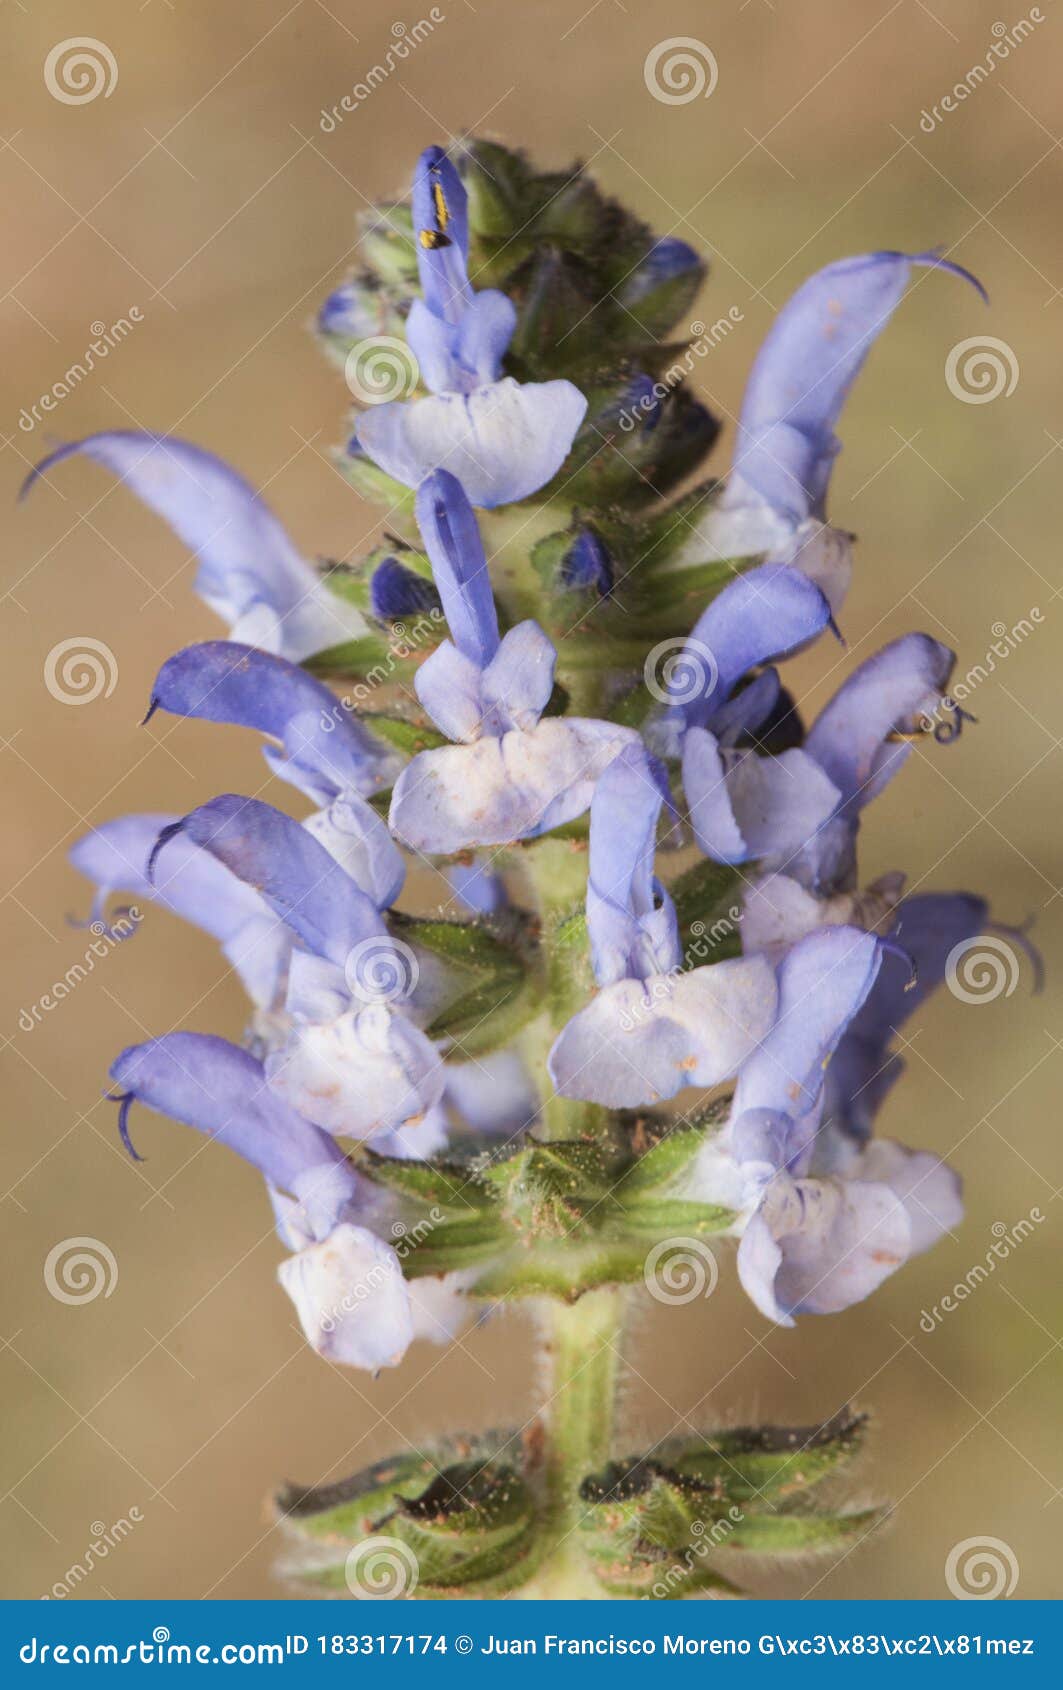 Clary Sauvage De Salvia Verbenaca Ou Plante Aromatique Violette Ou Bleue  Sage Sauvage Photo stock - Image du jardin, herbal: 183317174